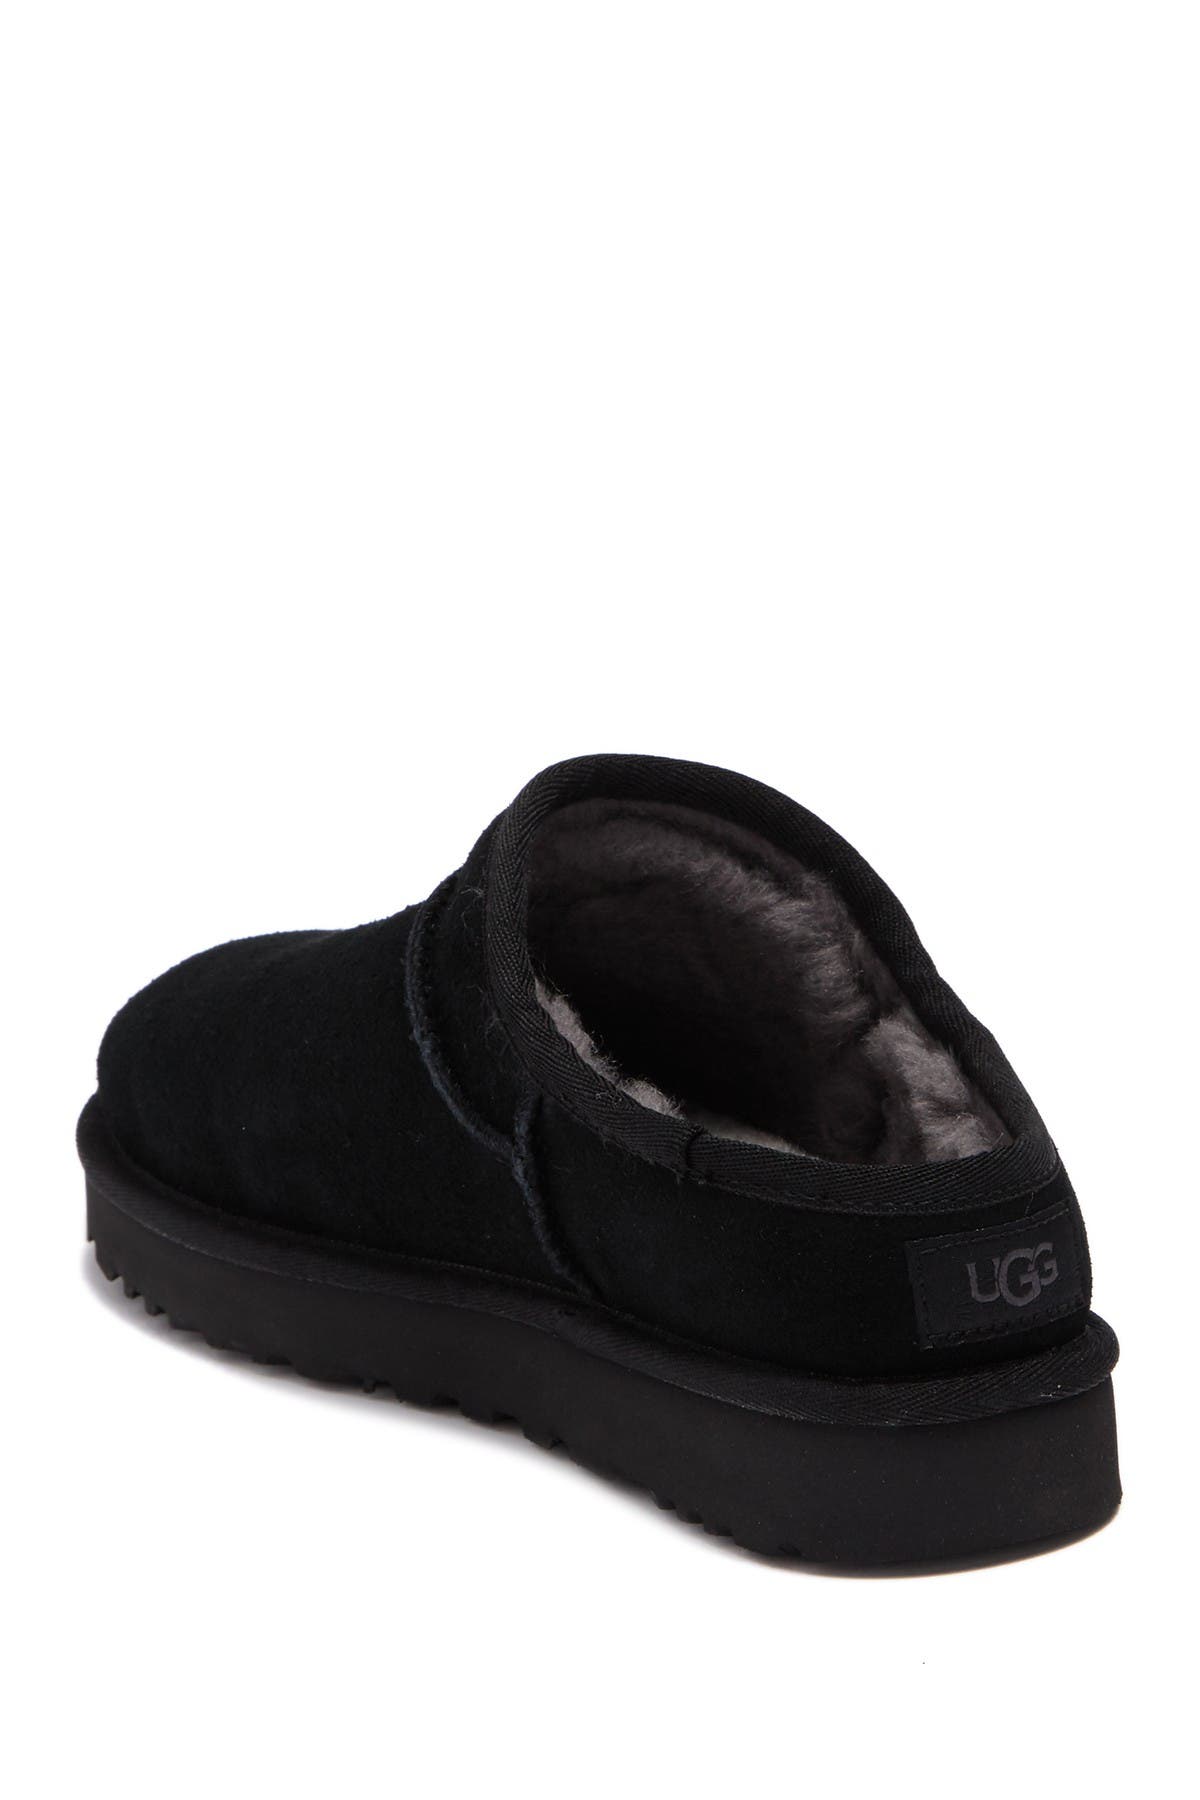 black ugg slippers size 8